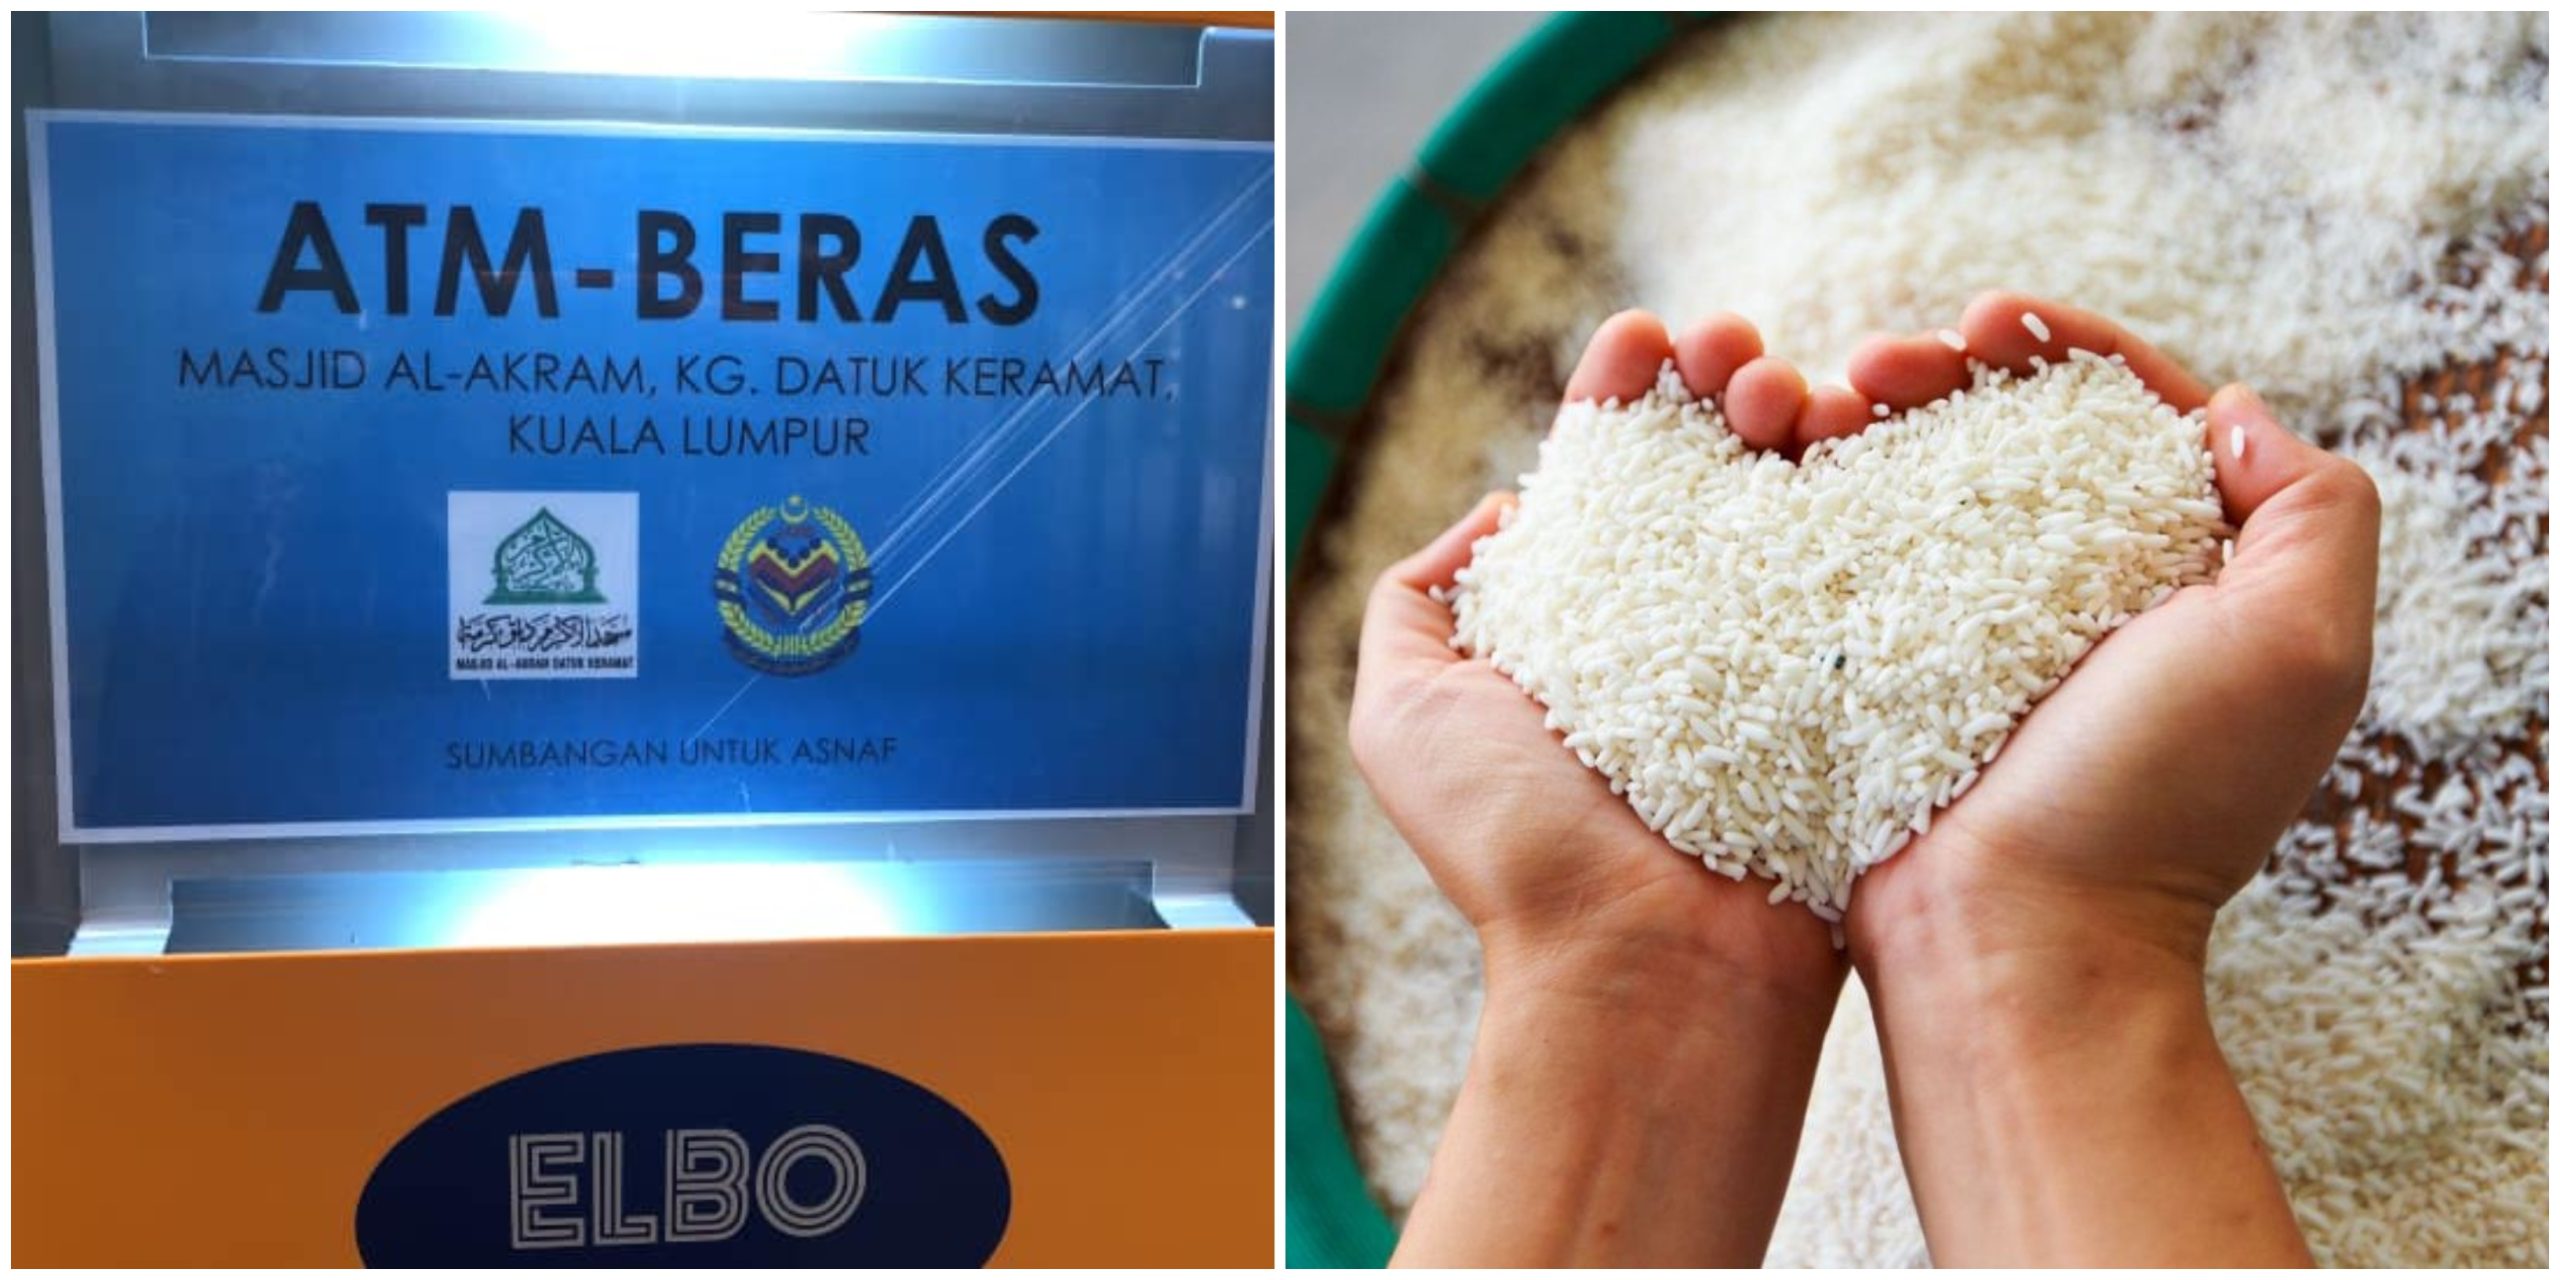 Mesin ATM-BERAS Pertama Di Malaysia Untuk Bantu Golongan Asnaf